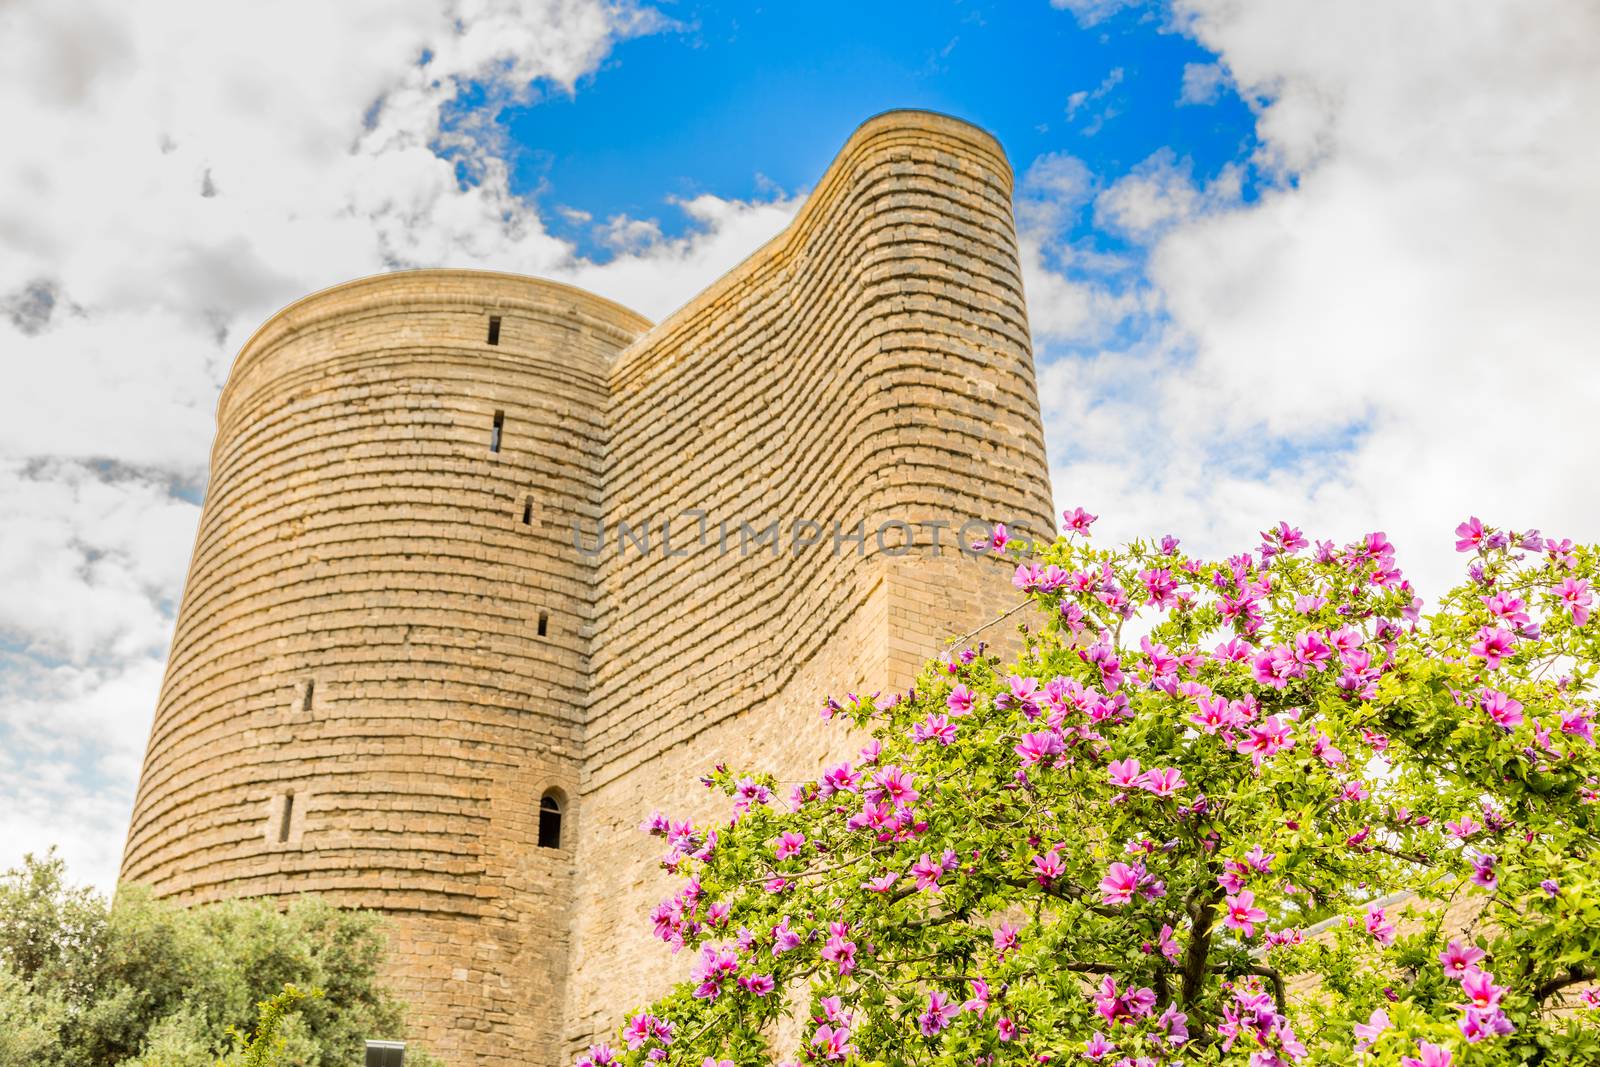 Gız Galası medieval  tower with flowers tree in the foreground, old town, Baku, Azerbaijan